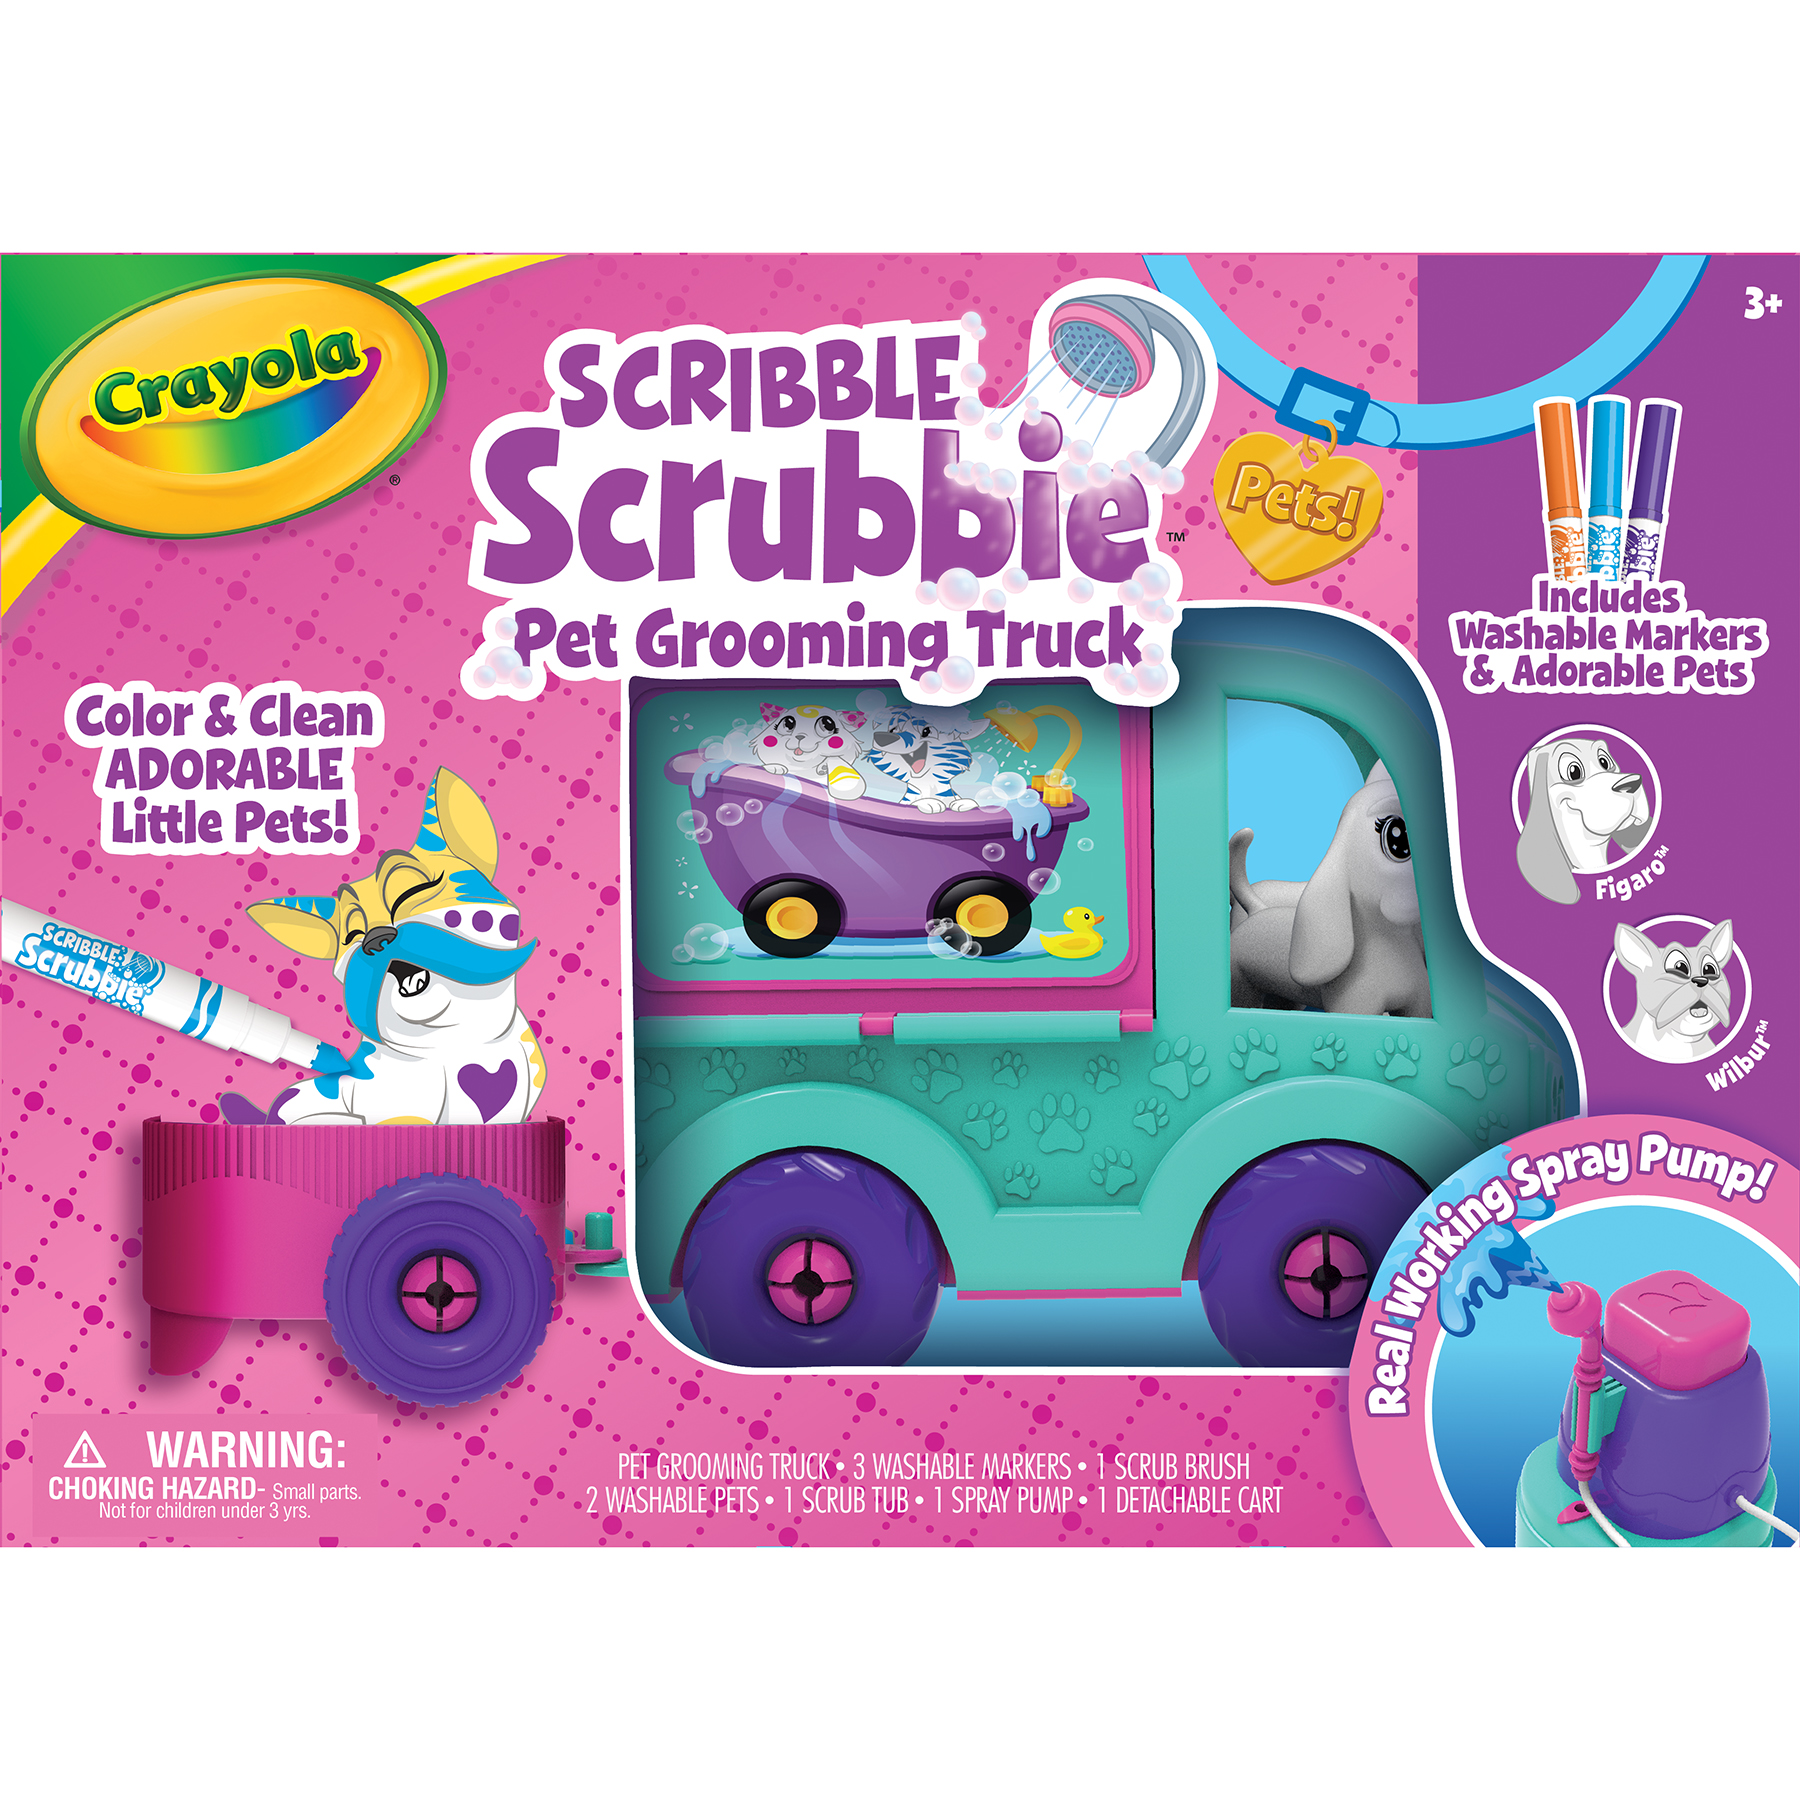 Crayola Scribble Scrubbie Grooming Truck Toy, Easter Basket Stuffers, 10 Pcs, Beginner Child - image 5 of 10